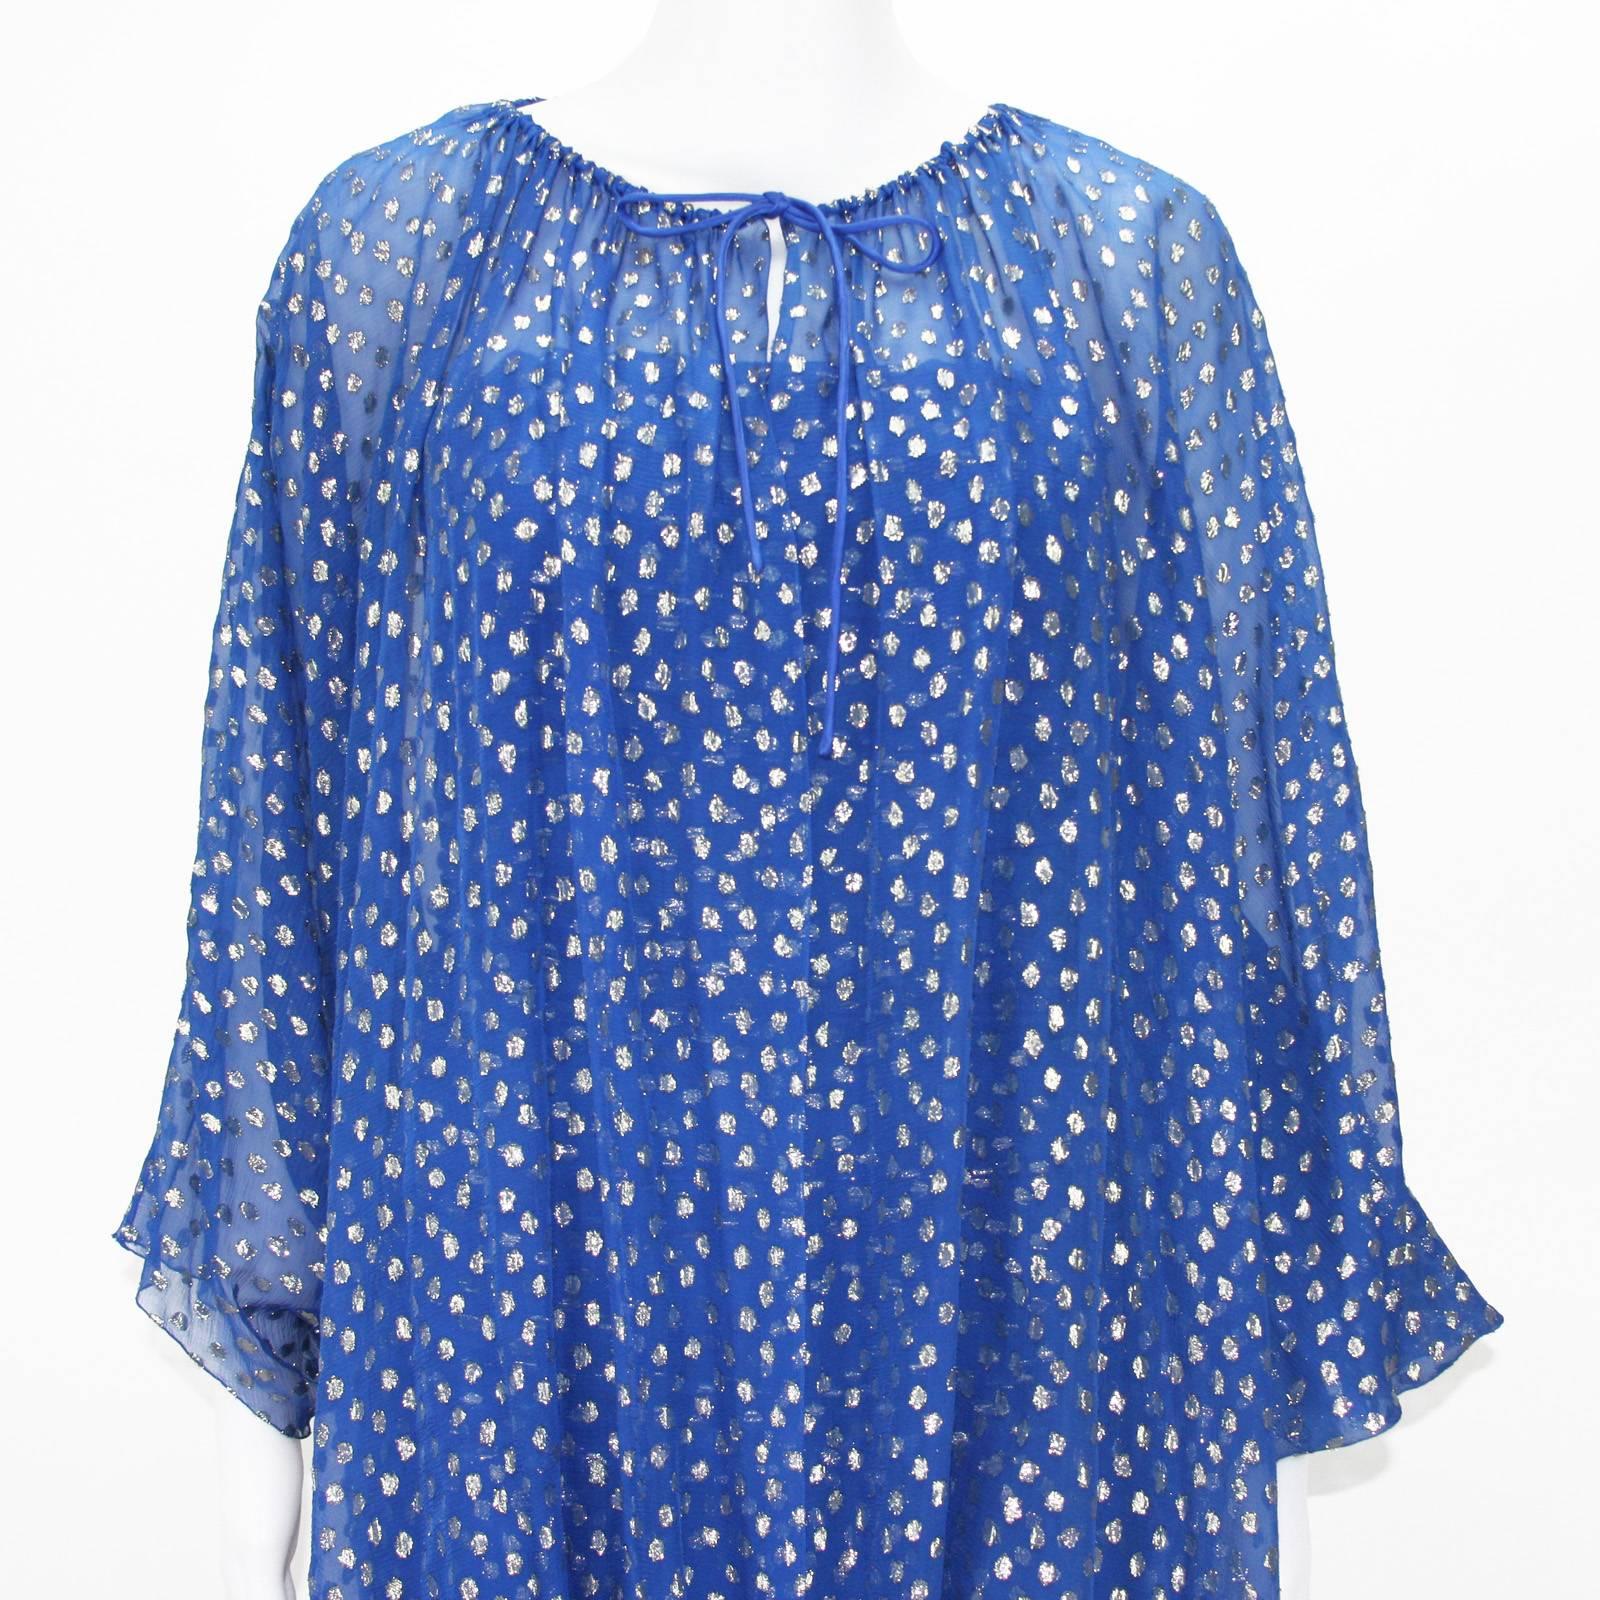 Christian Dior Paris F/W 1976 Numbered Polka Dot Blue Sheer Dress Set 8